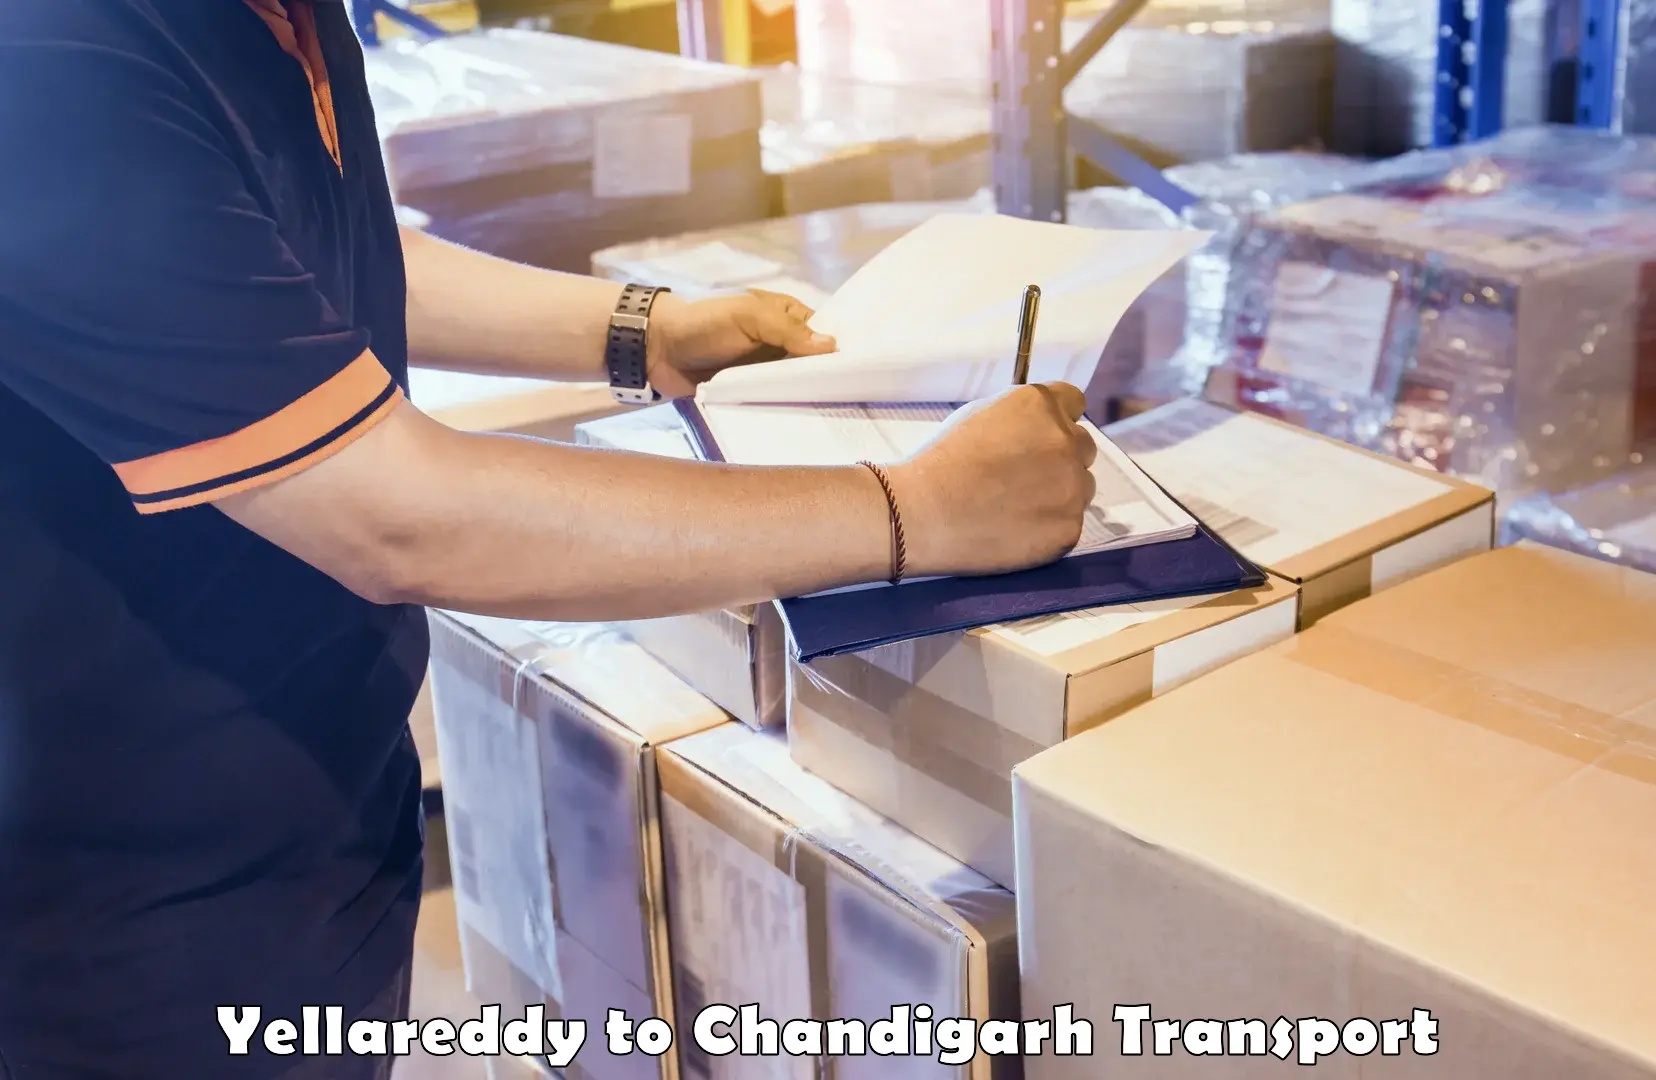 Container transport service Yellareddy to Chandigarh